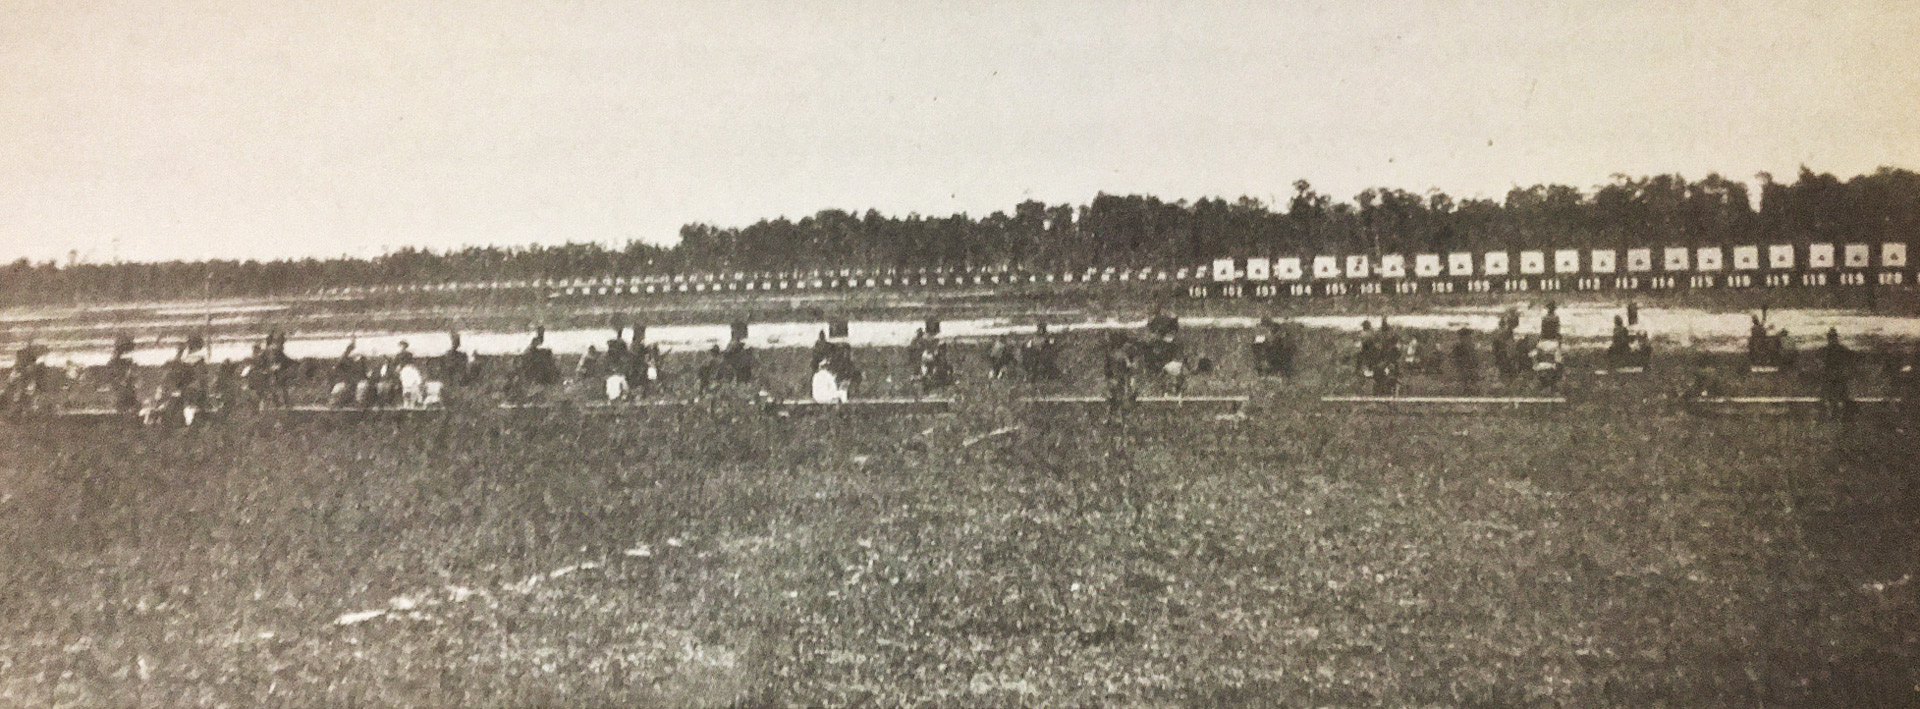 Jacksonville National Divisional Match, 1914